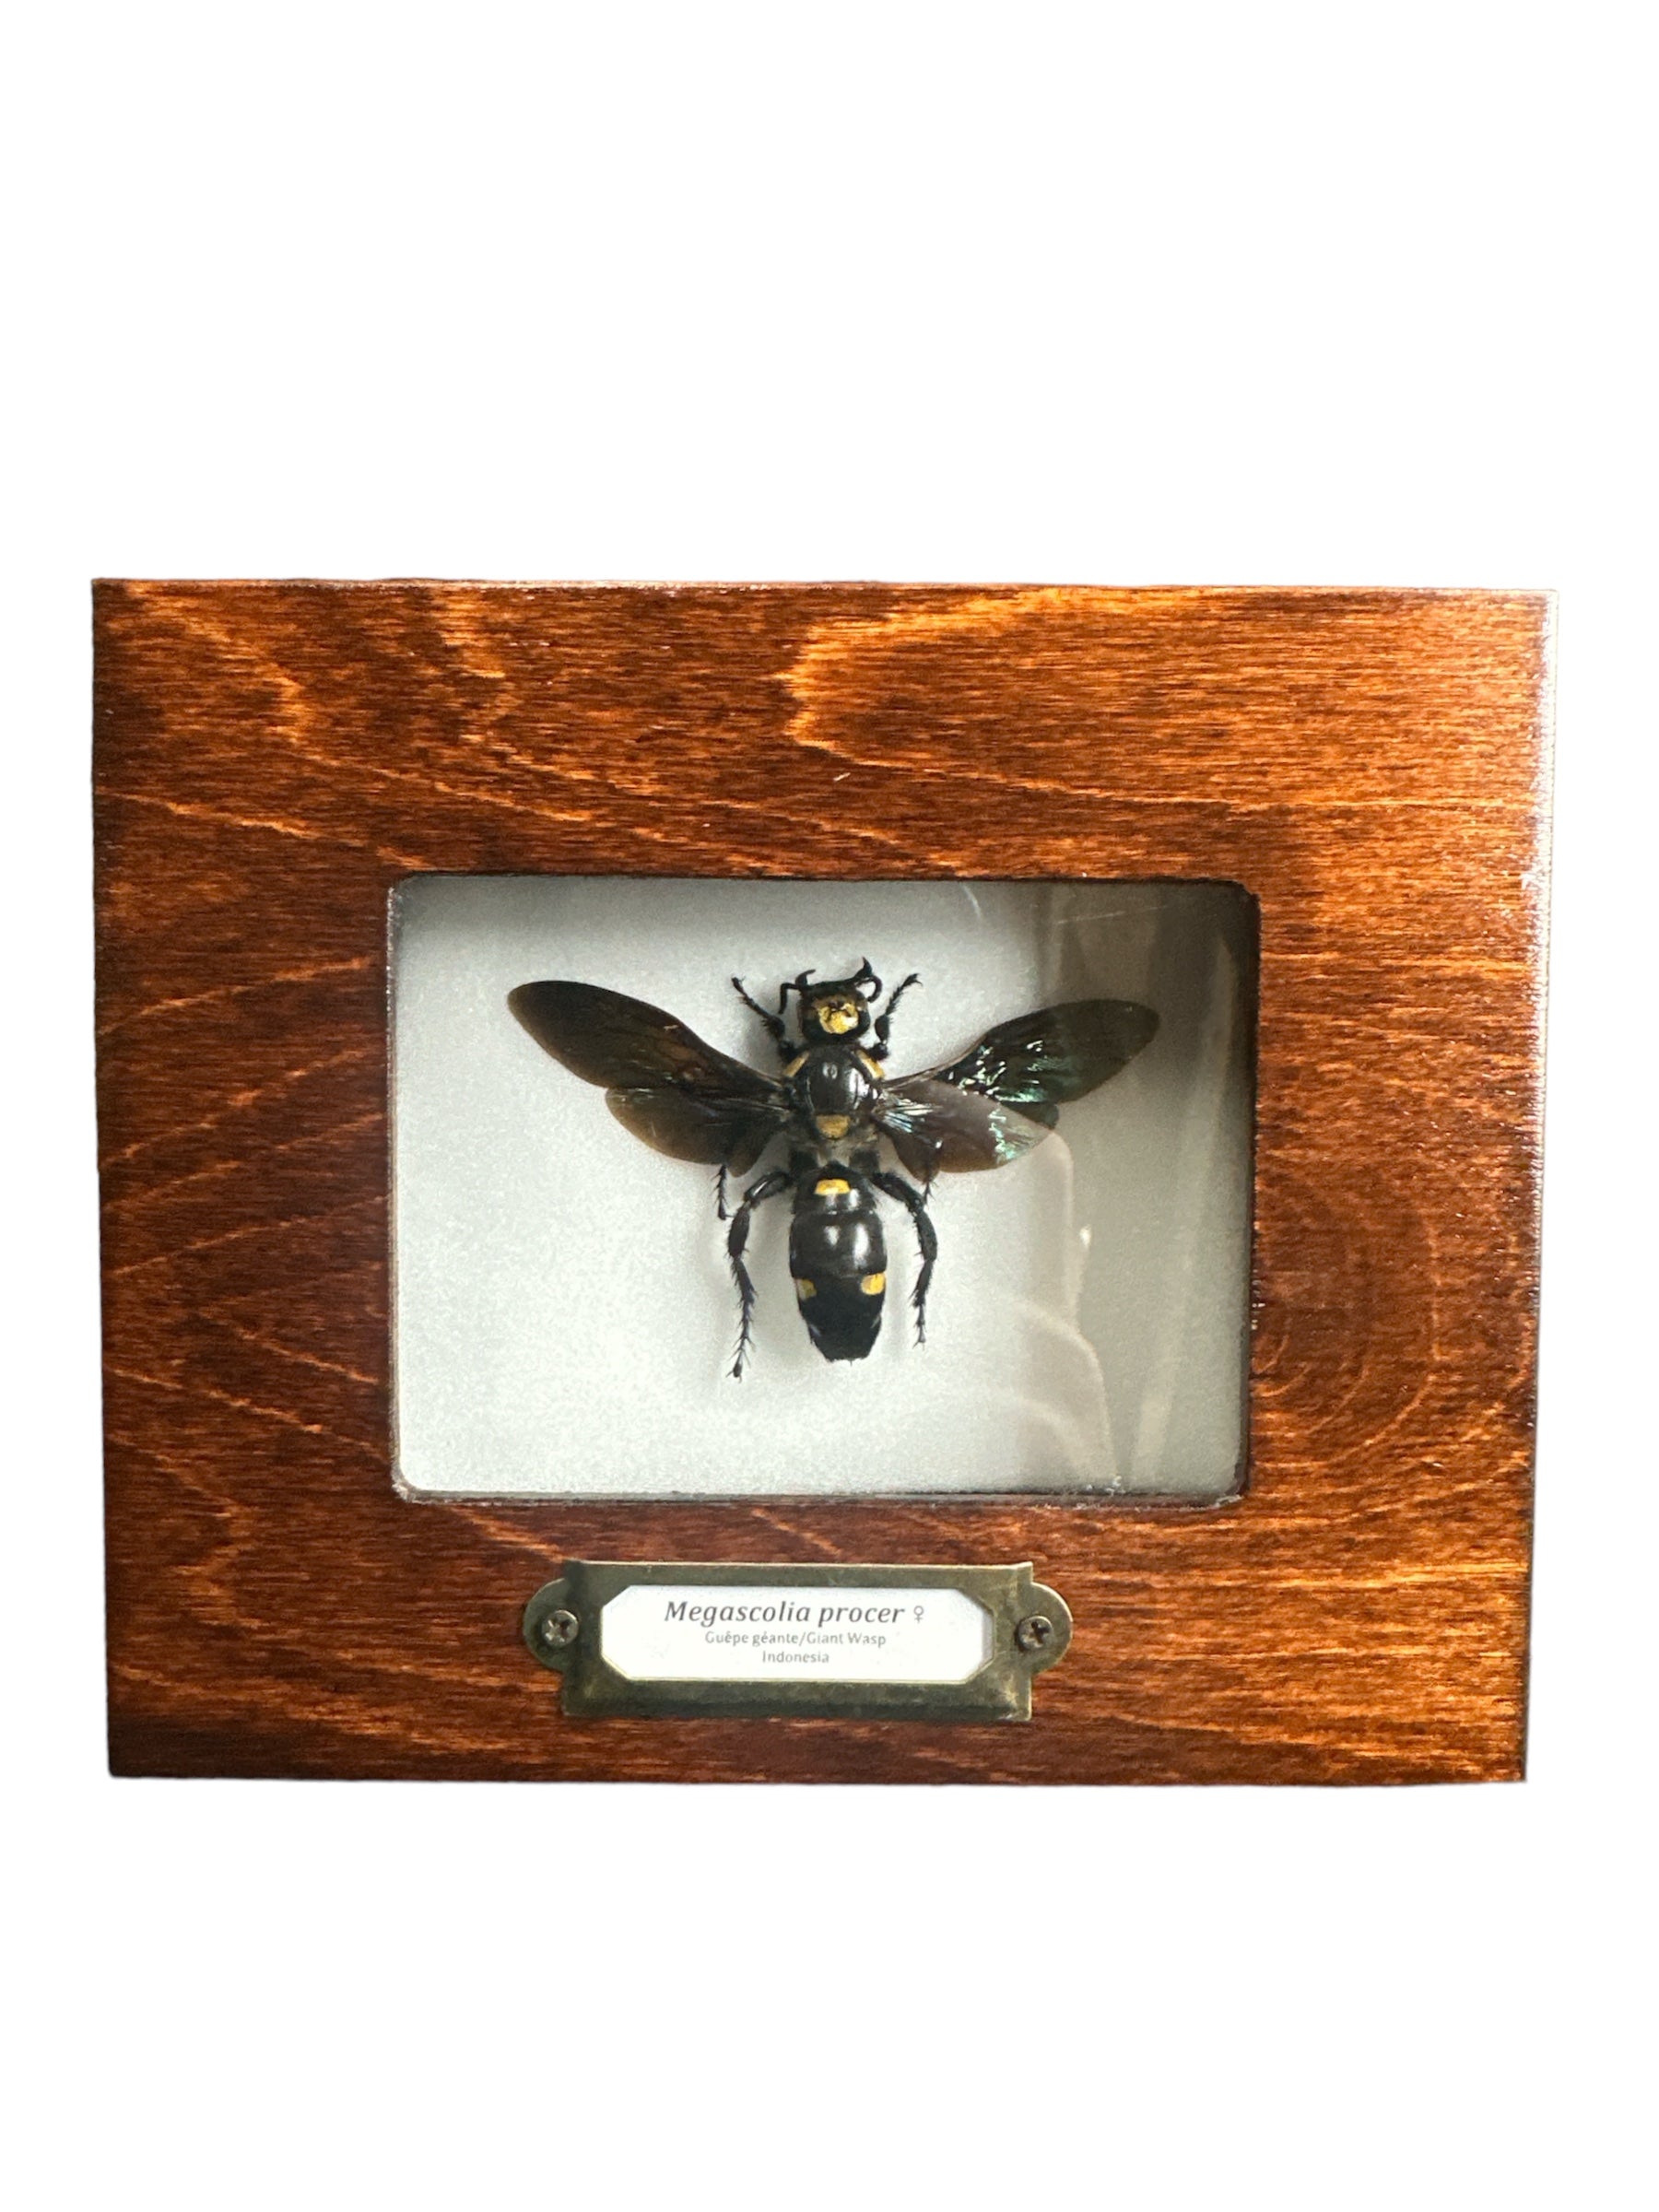 Giant Scoliid Wasp - Female (Megascolia procer) - 2x3" Frame